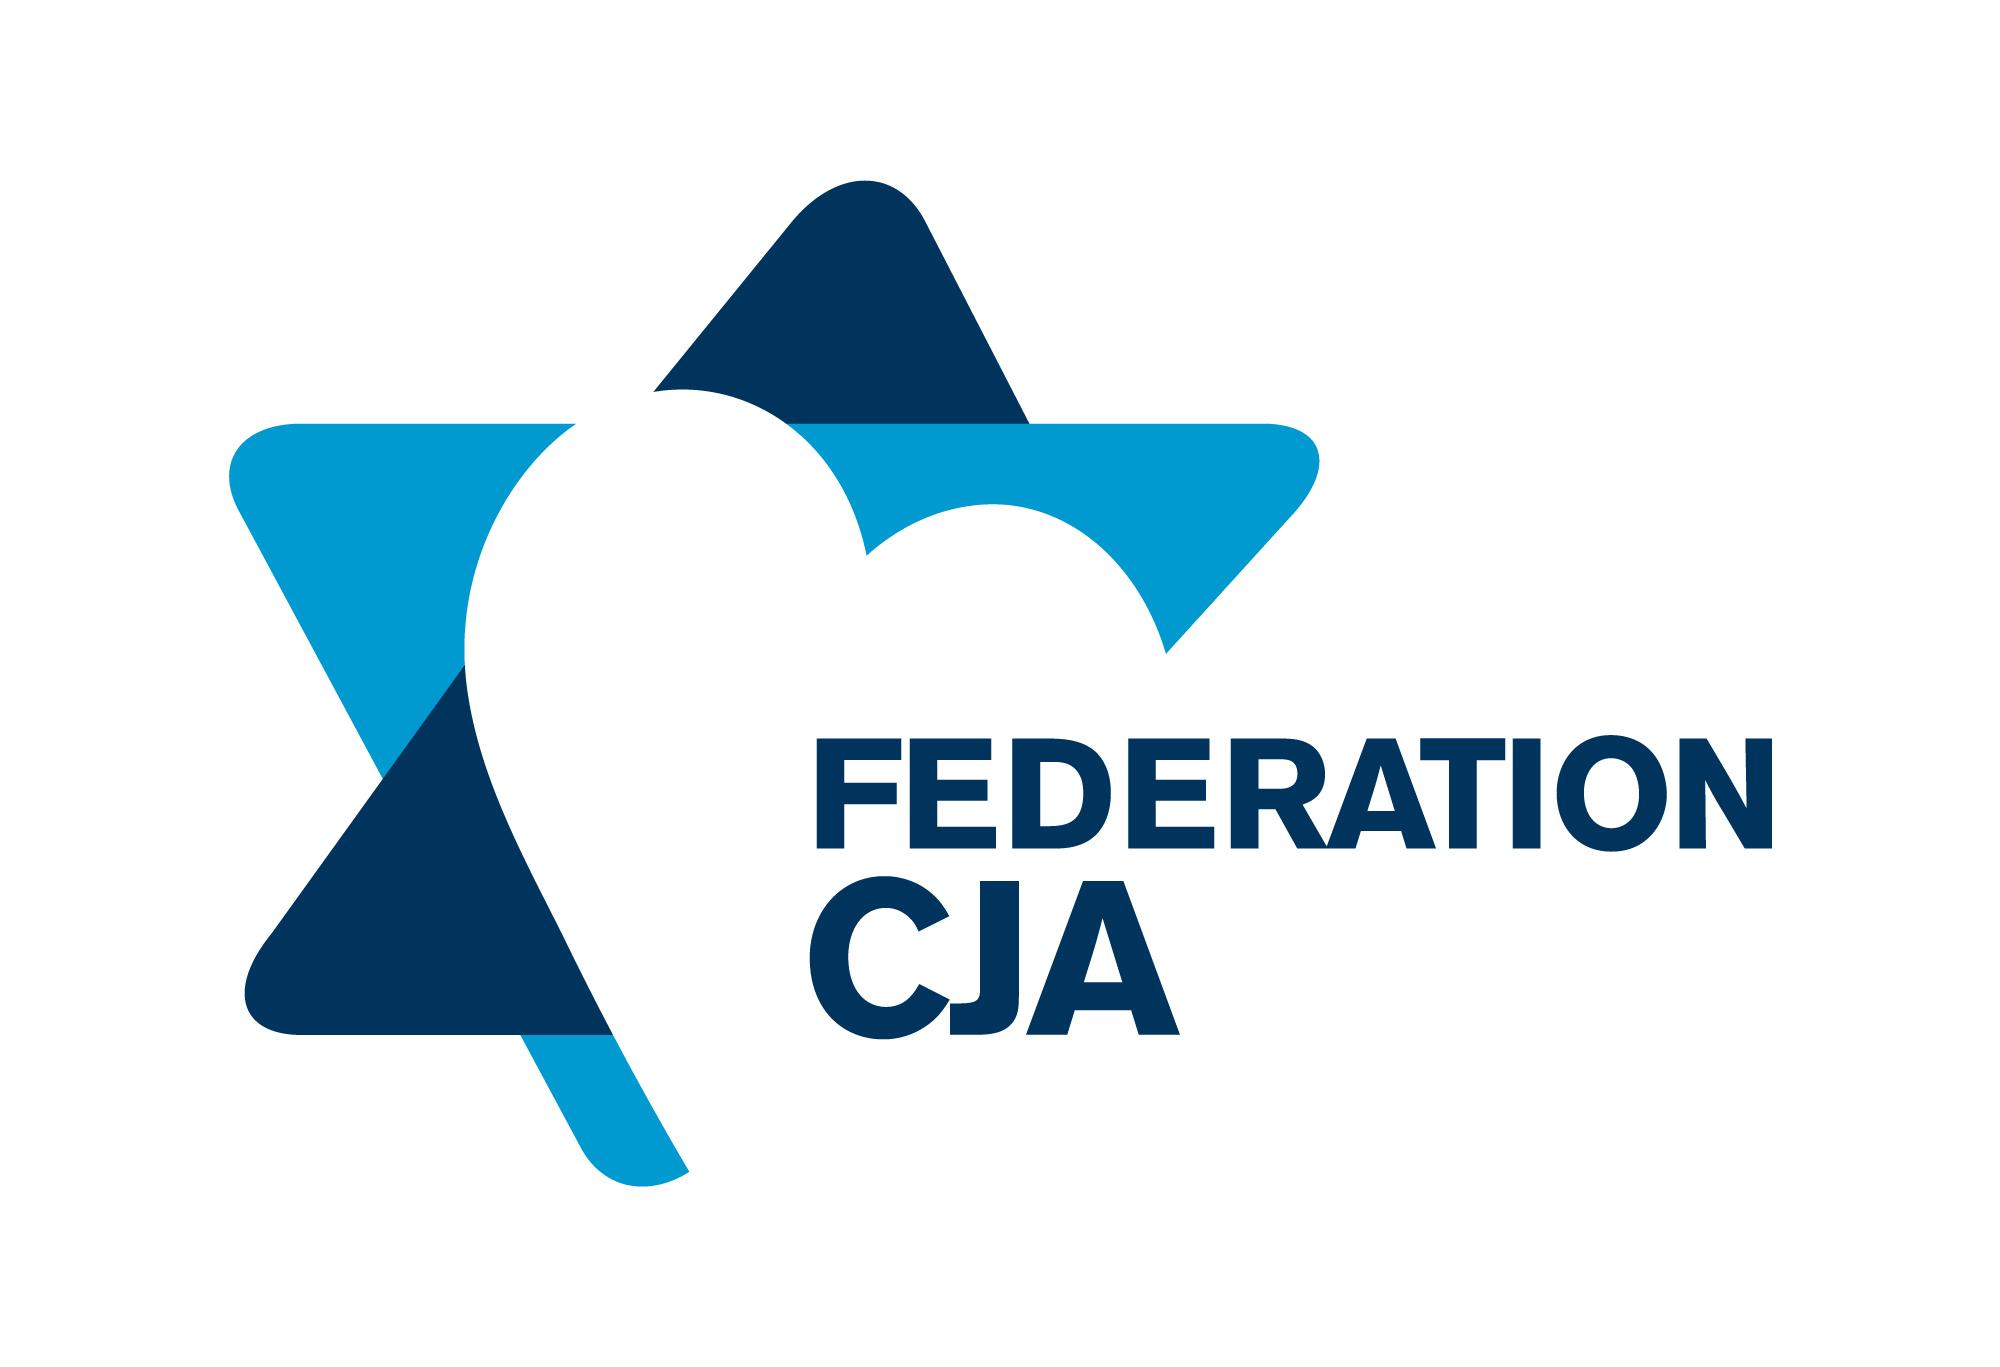 FCJA_logo.jpg